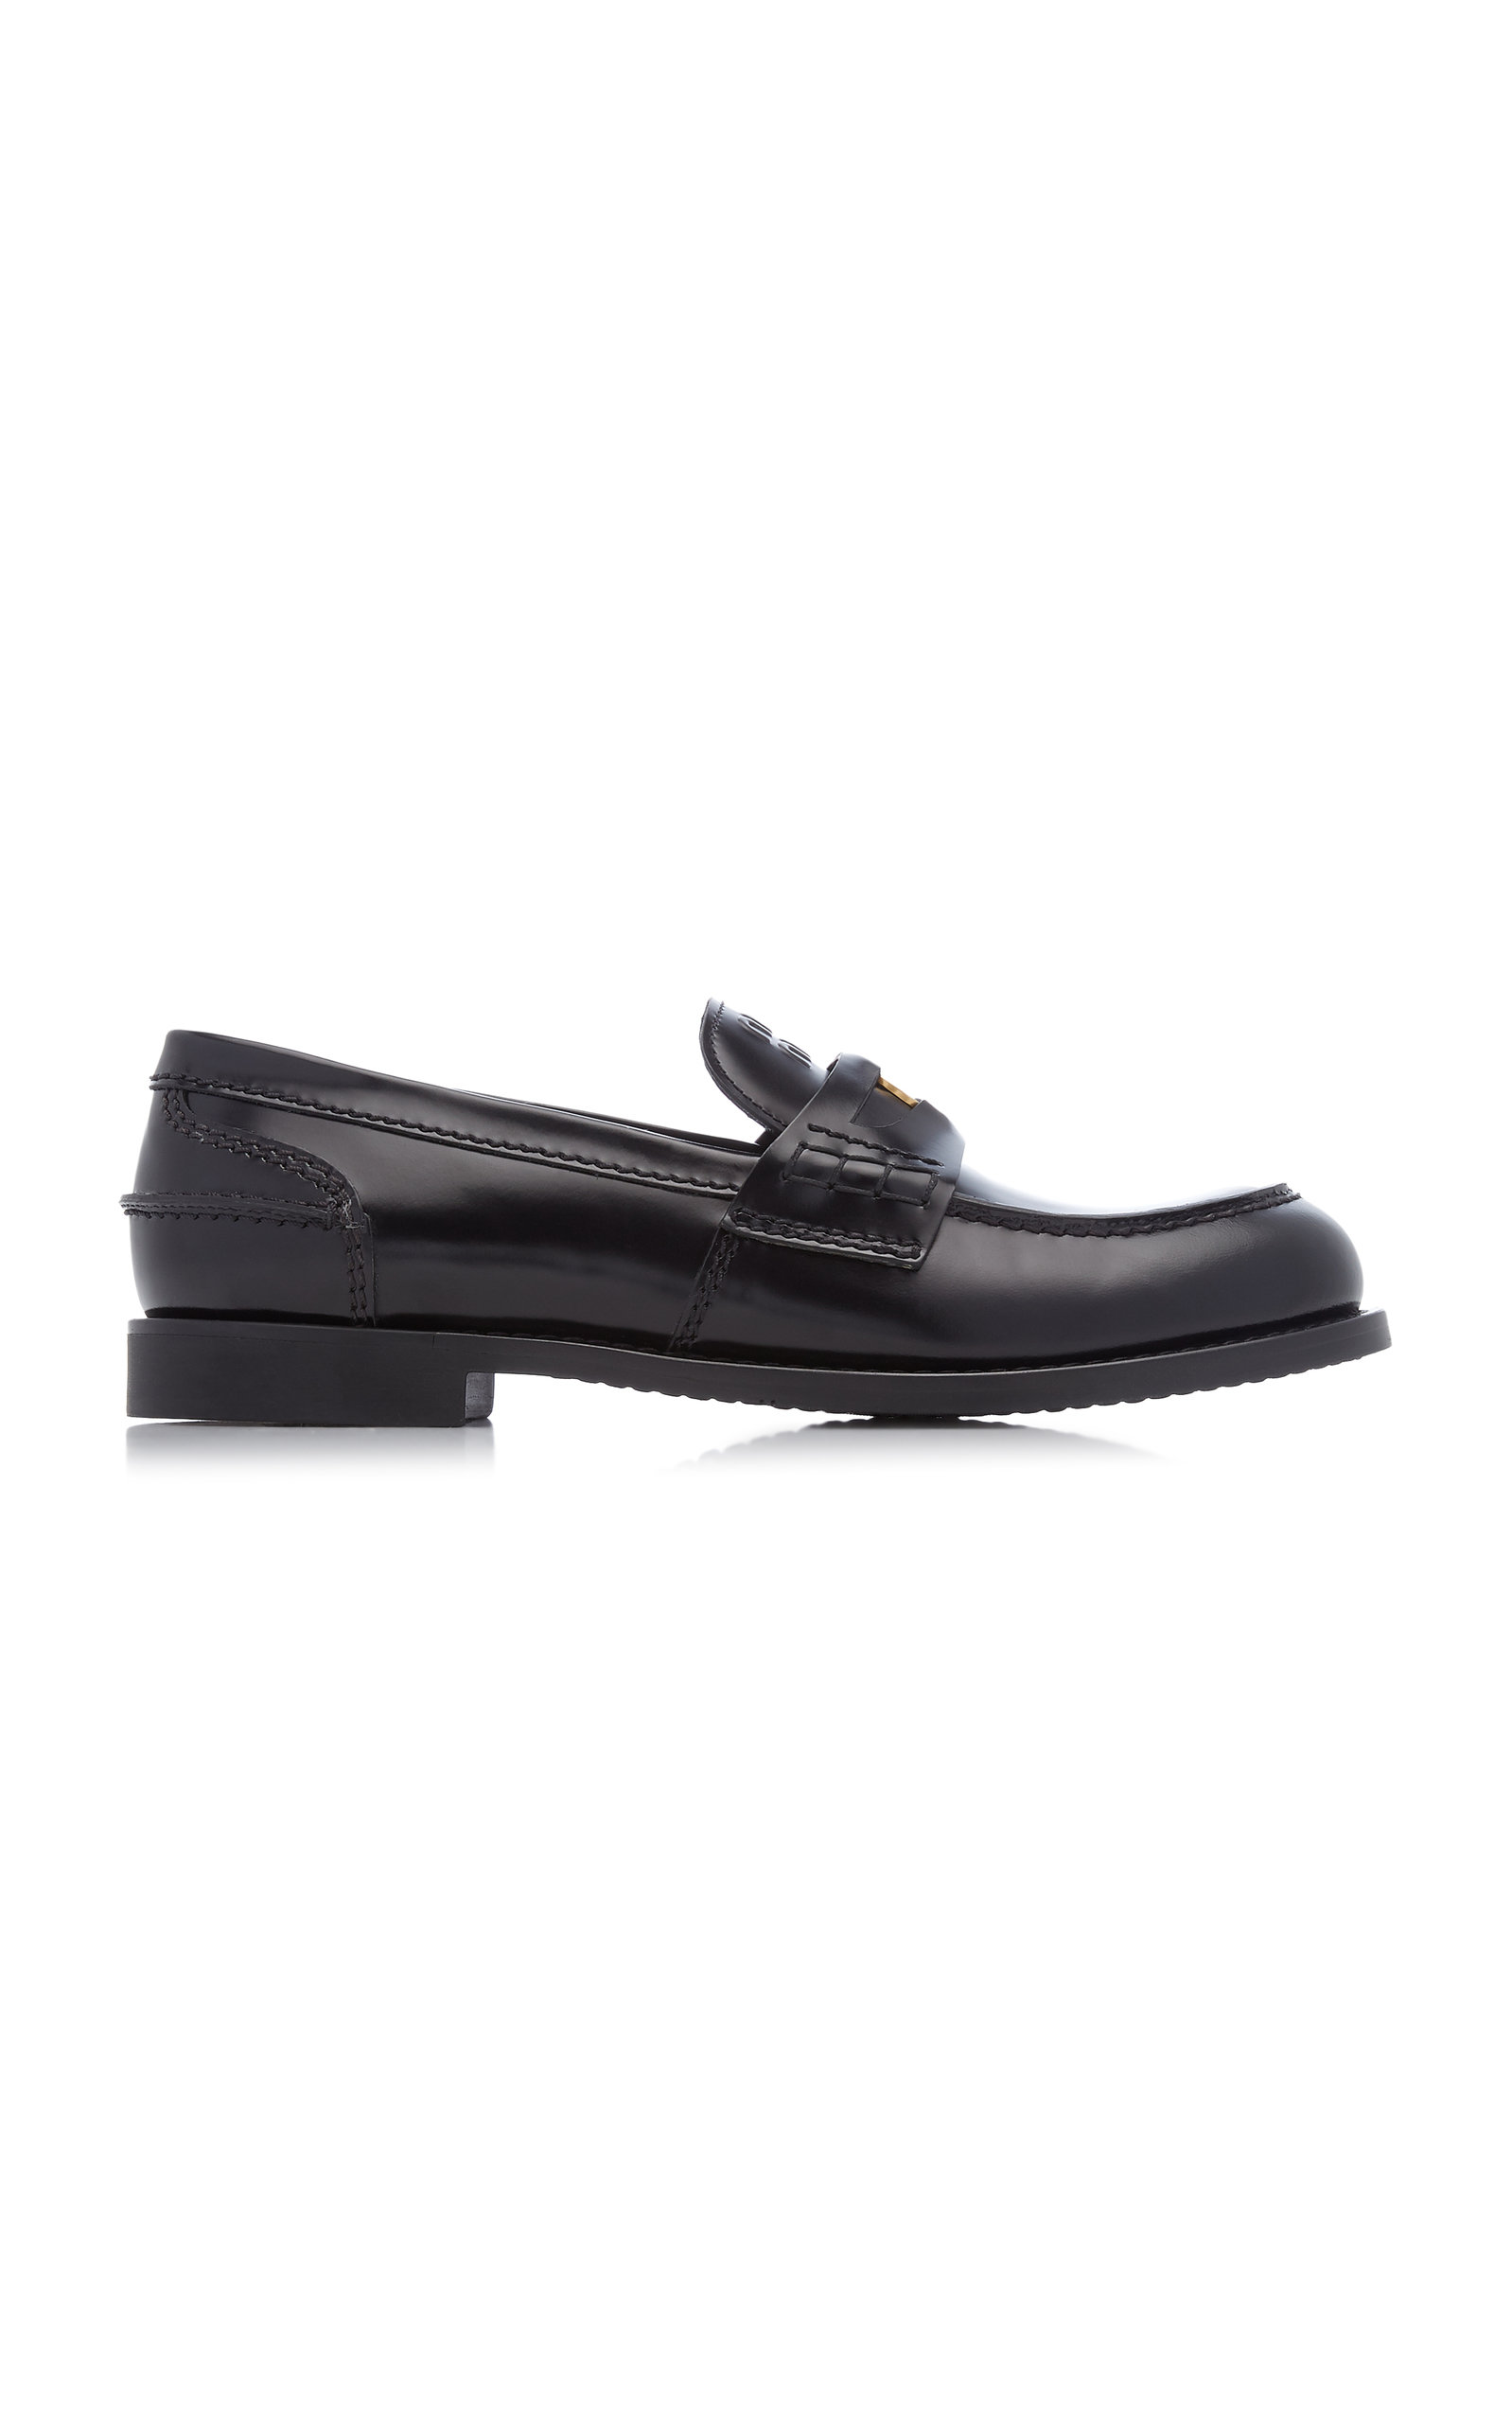 Miu Miu - Women's Patent Leather Loafers - Black - Moda Operandi